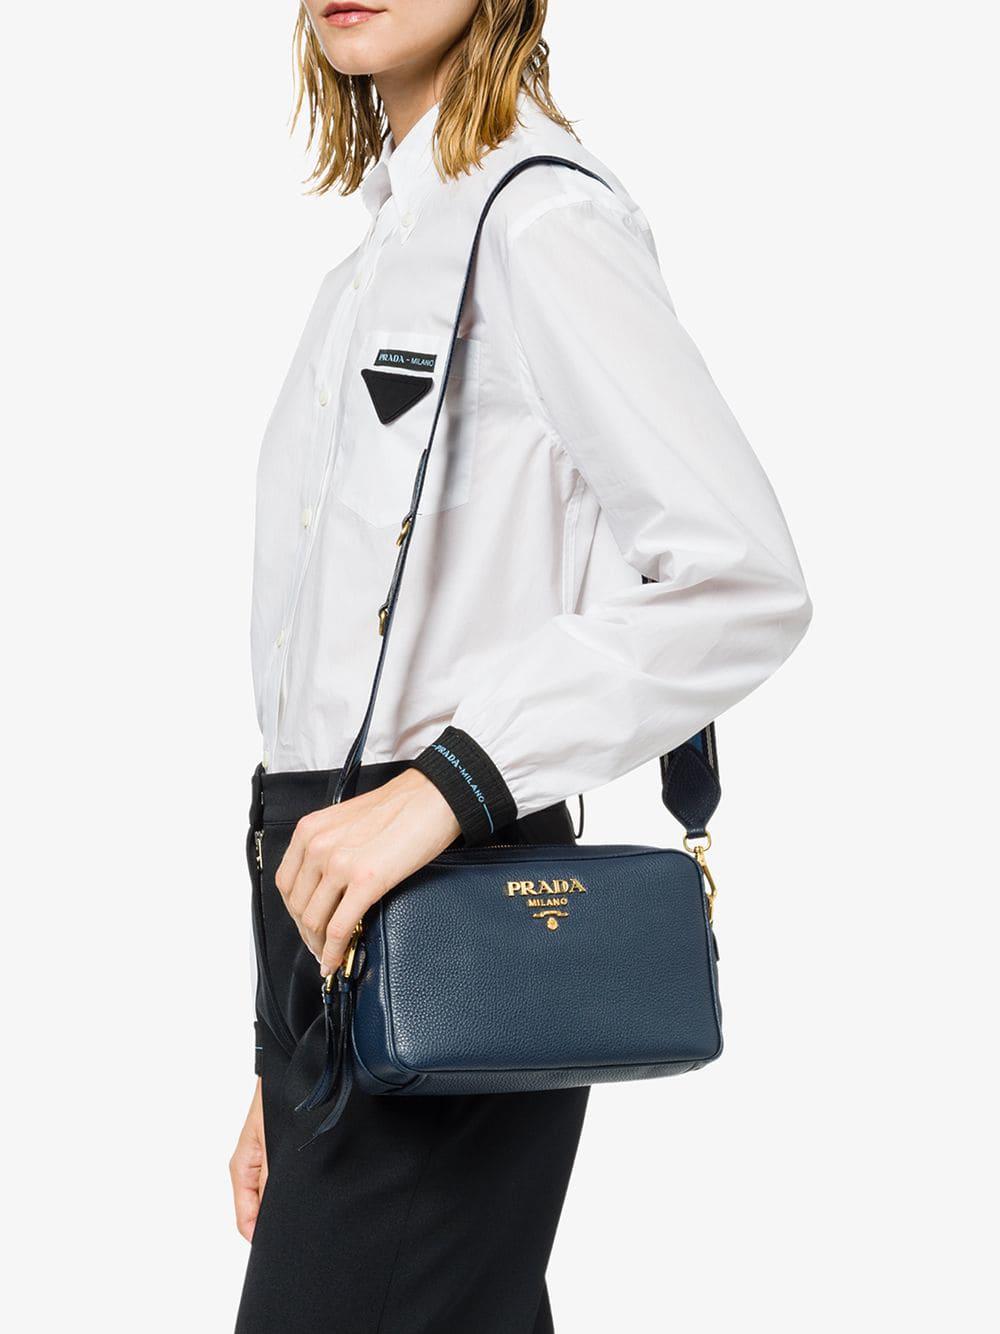 Prada Calf Leather Shoulder Bag in Blue - Lyst